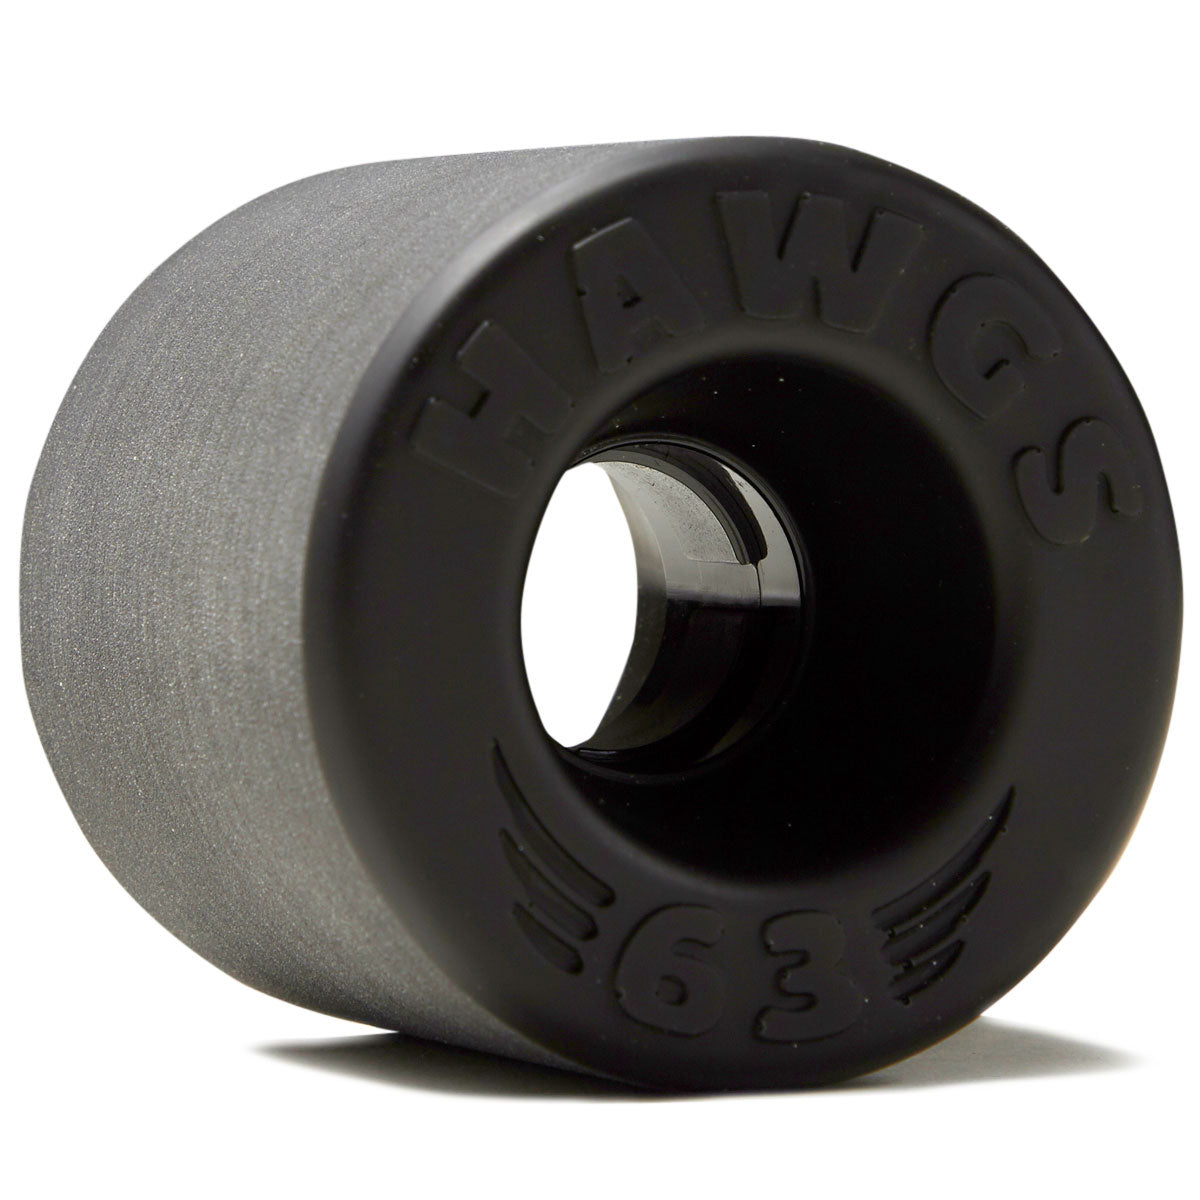 Hawgs Doozies 78a Stone Ground Longboard Wheels - Black - 63mm image 1